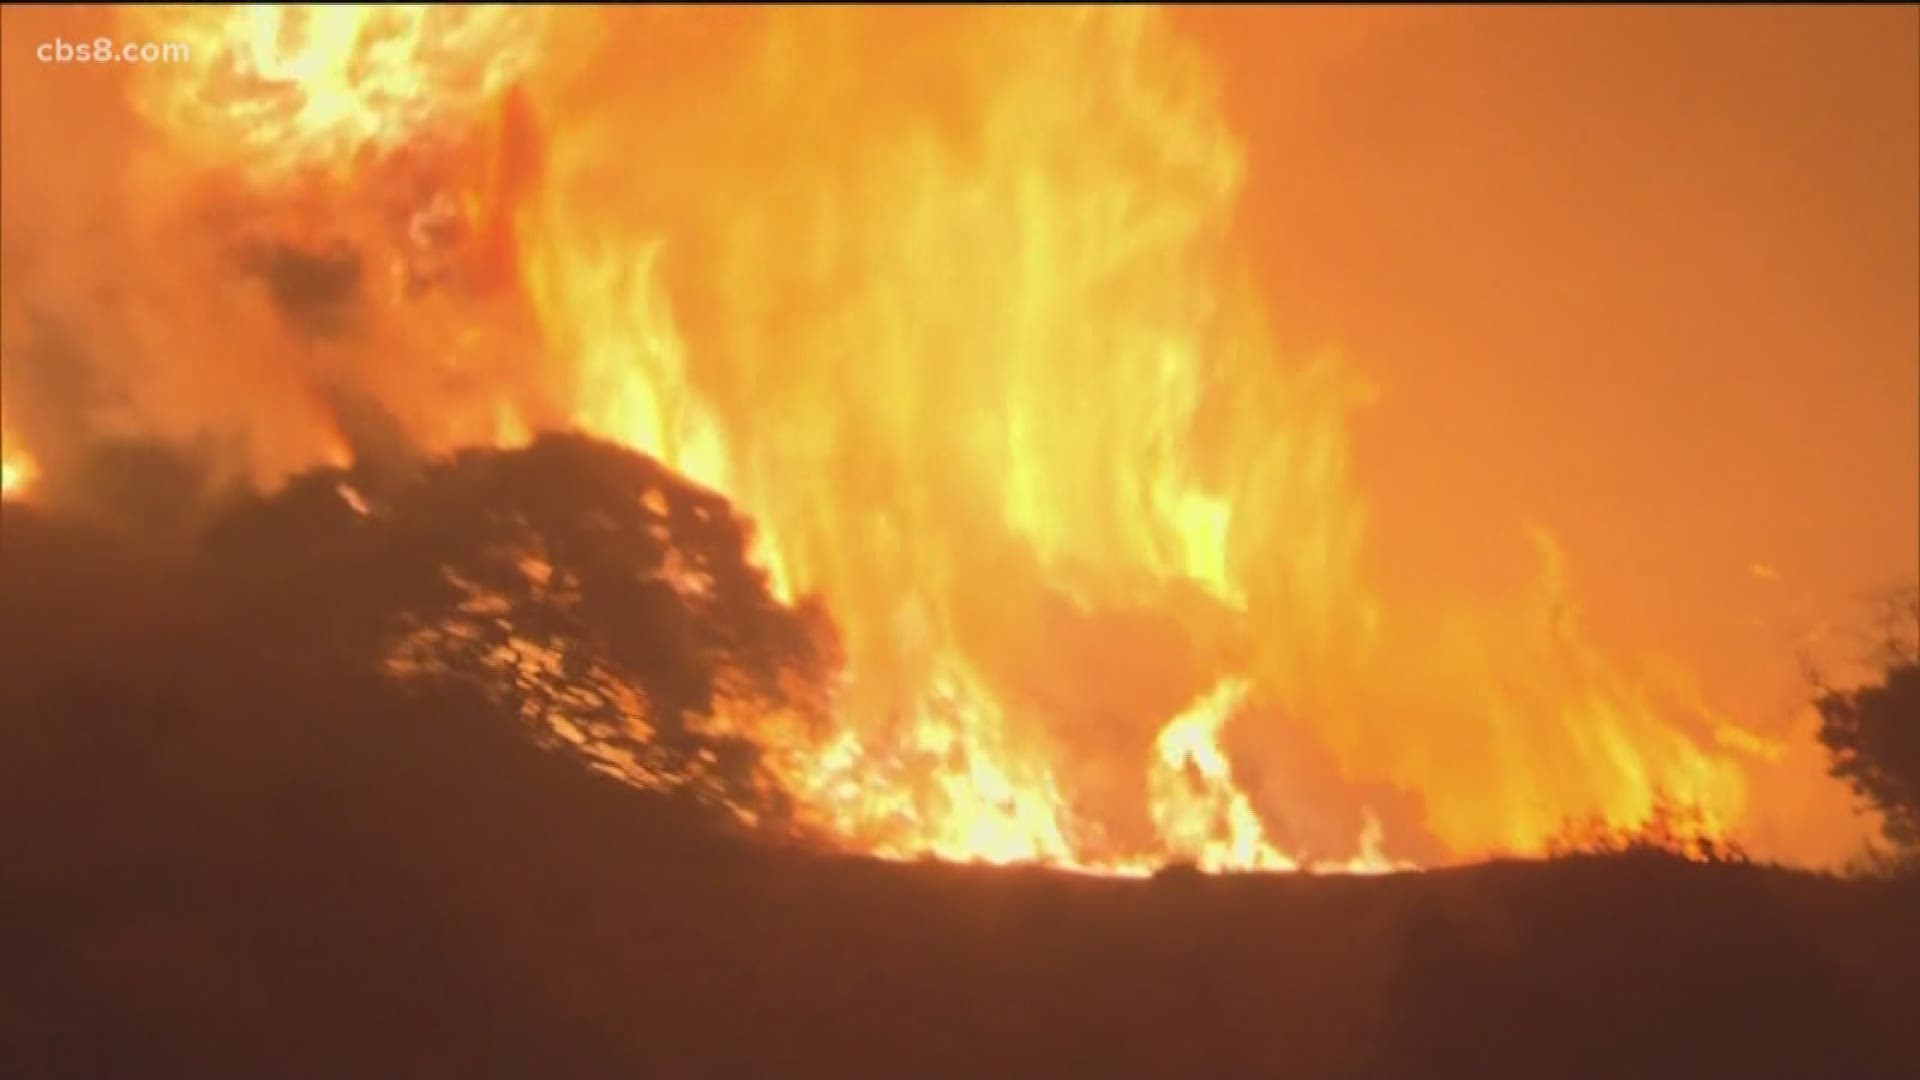 Saddle Ridge Fire burning in Granada Hills, Porter Ranch, Sylmar blackens 4,600 acres.